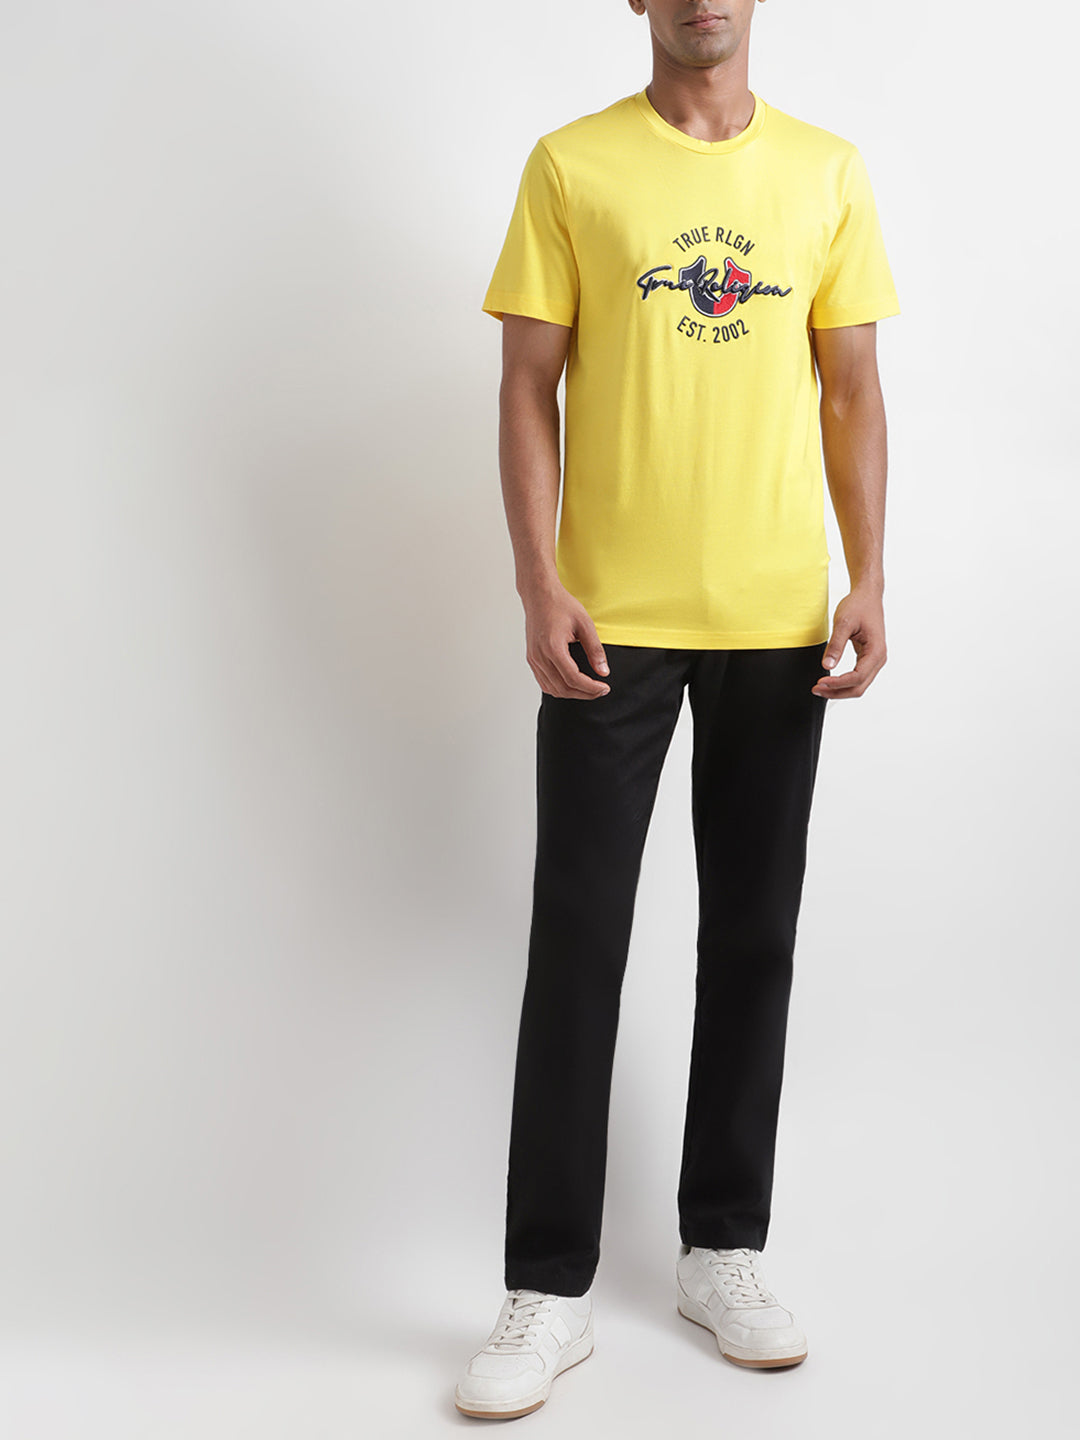 True Religion Yellow Logo Regular Fit T-Shirt